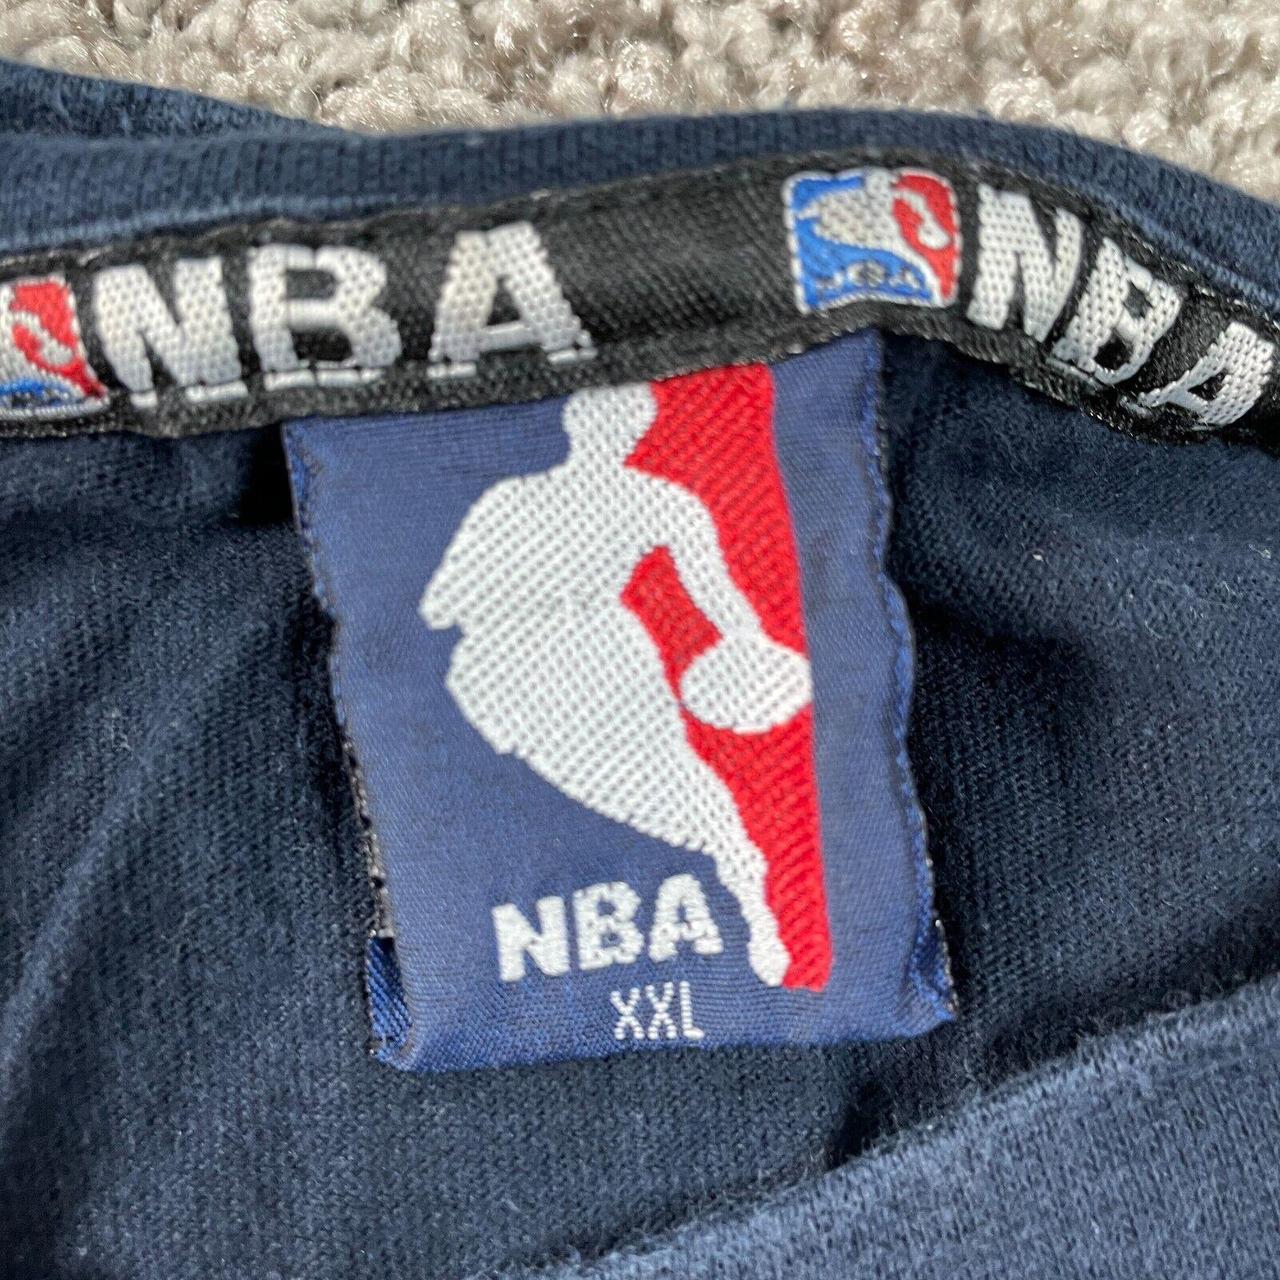 Official NBA dri-fit compression shirt NEVER WORN NEW - Depop